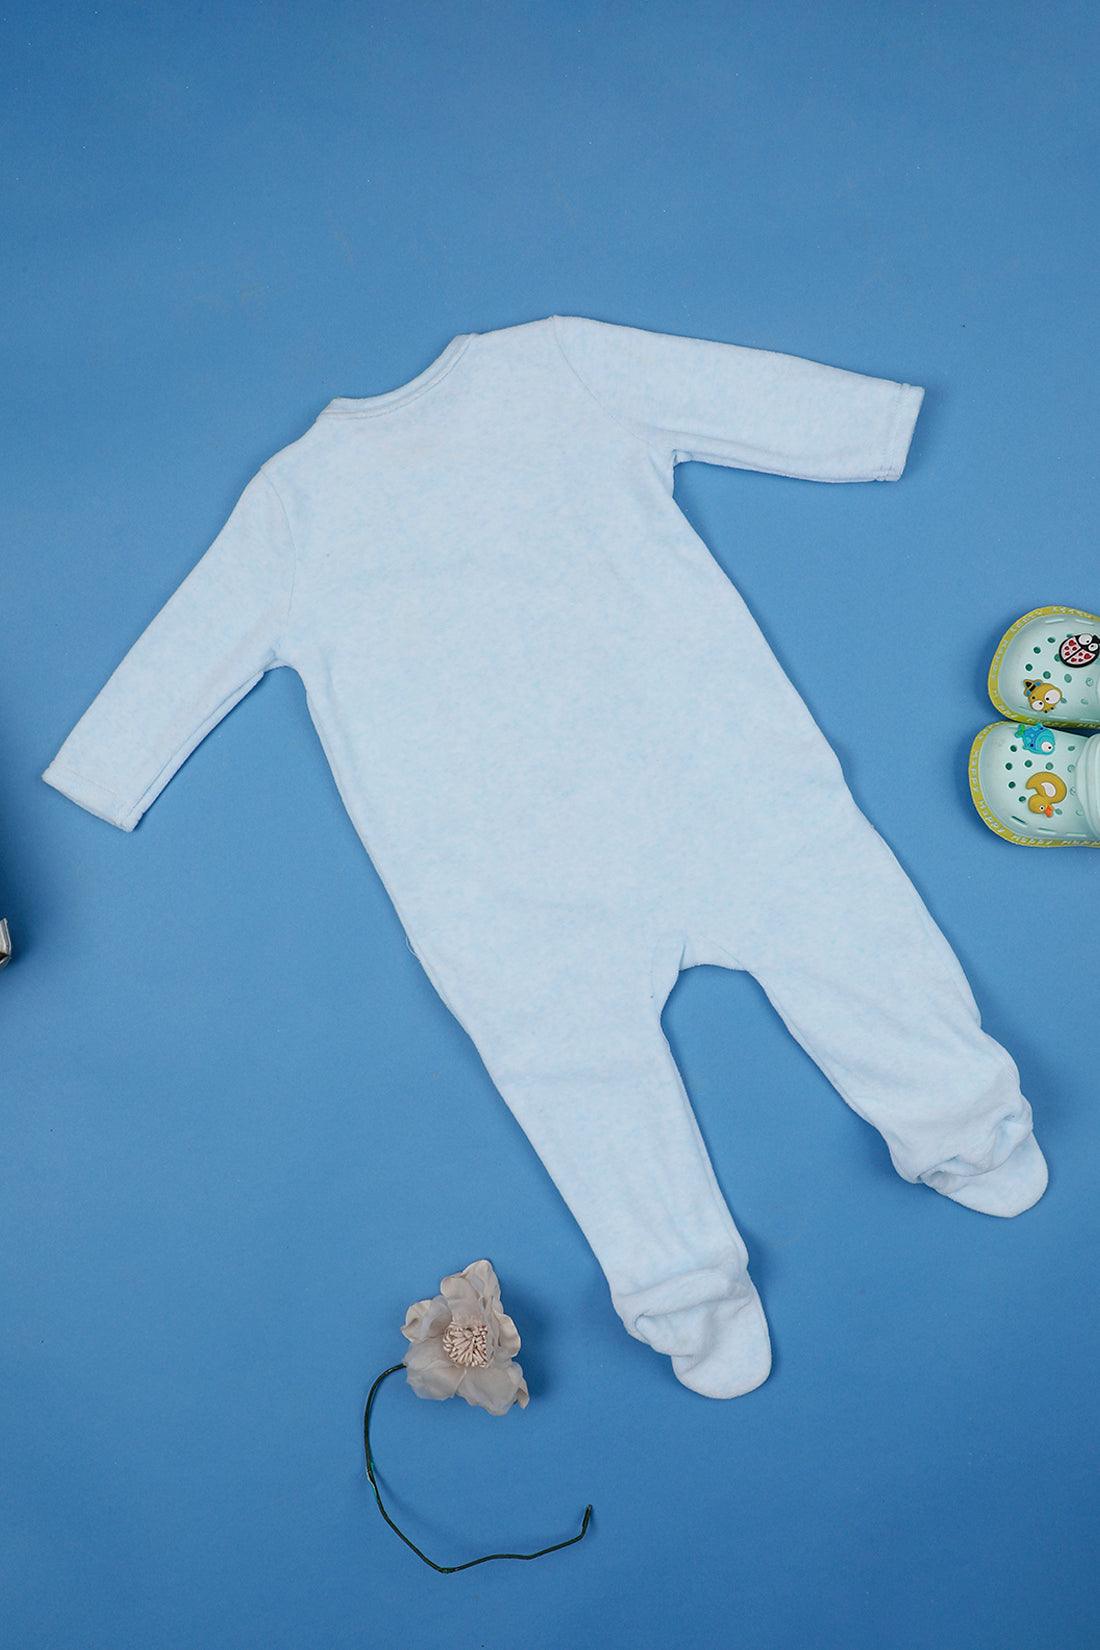 One Friday Infants Girls Blue Round Neck Cotton Sleepsuit